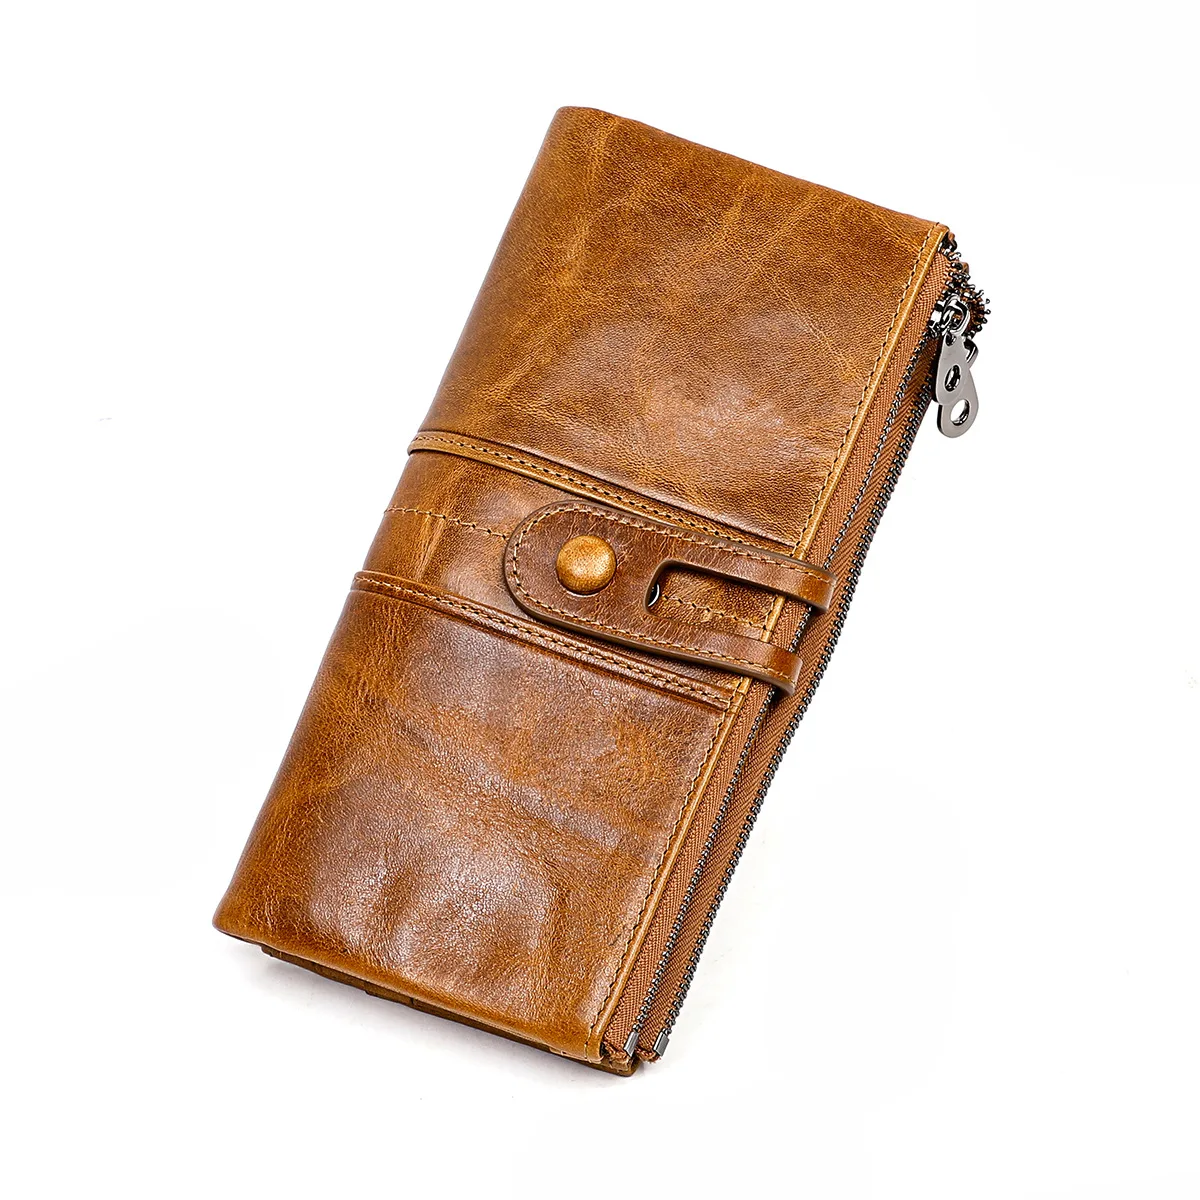 Genuine Cowhide Leather Women Wallets Fashion Purse with Card Holder RFID Blocking Vintage Long Wallet Clutch Wrist Bag Premium